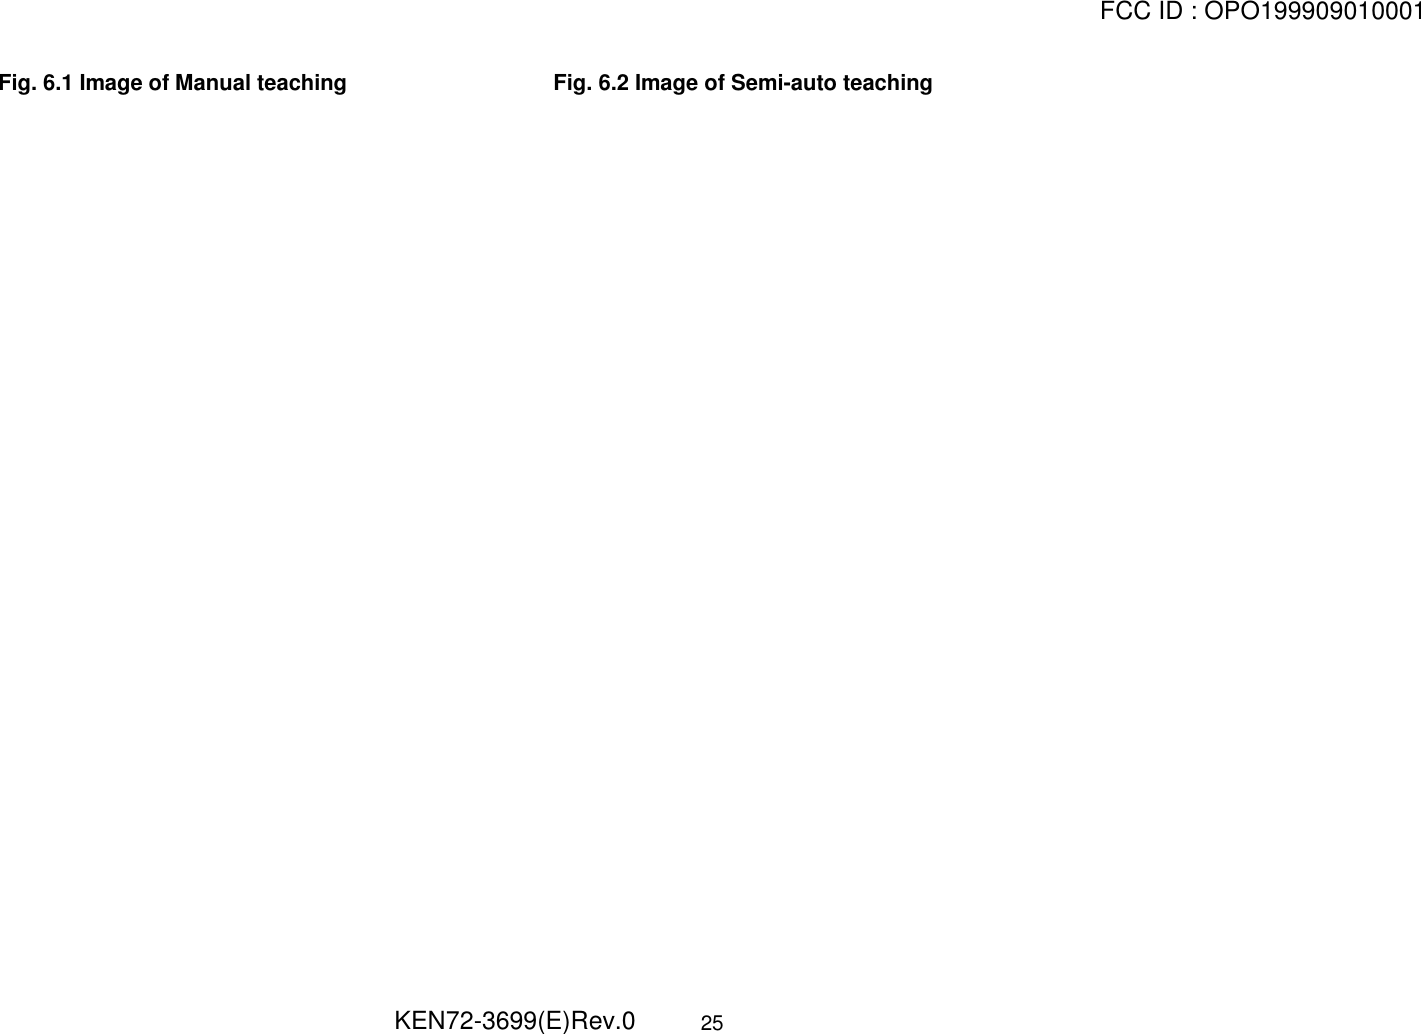 FCC ID : OPO199909010001                                                         KEN72-3699(E)Rev.0 25Fig. 6.1 Image of Manual teaching                                  Fig. 6.2 Image of Semi-auto teaching